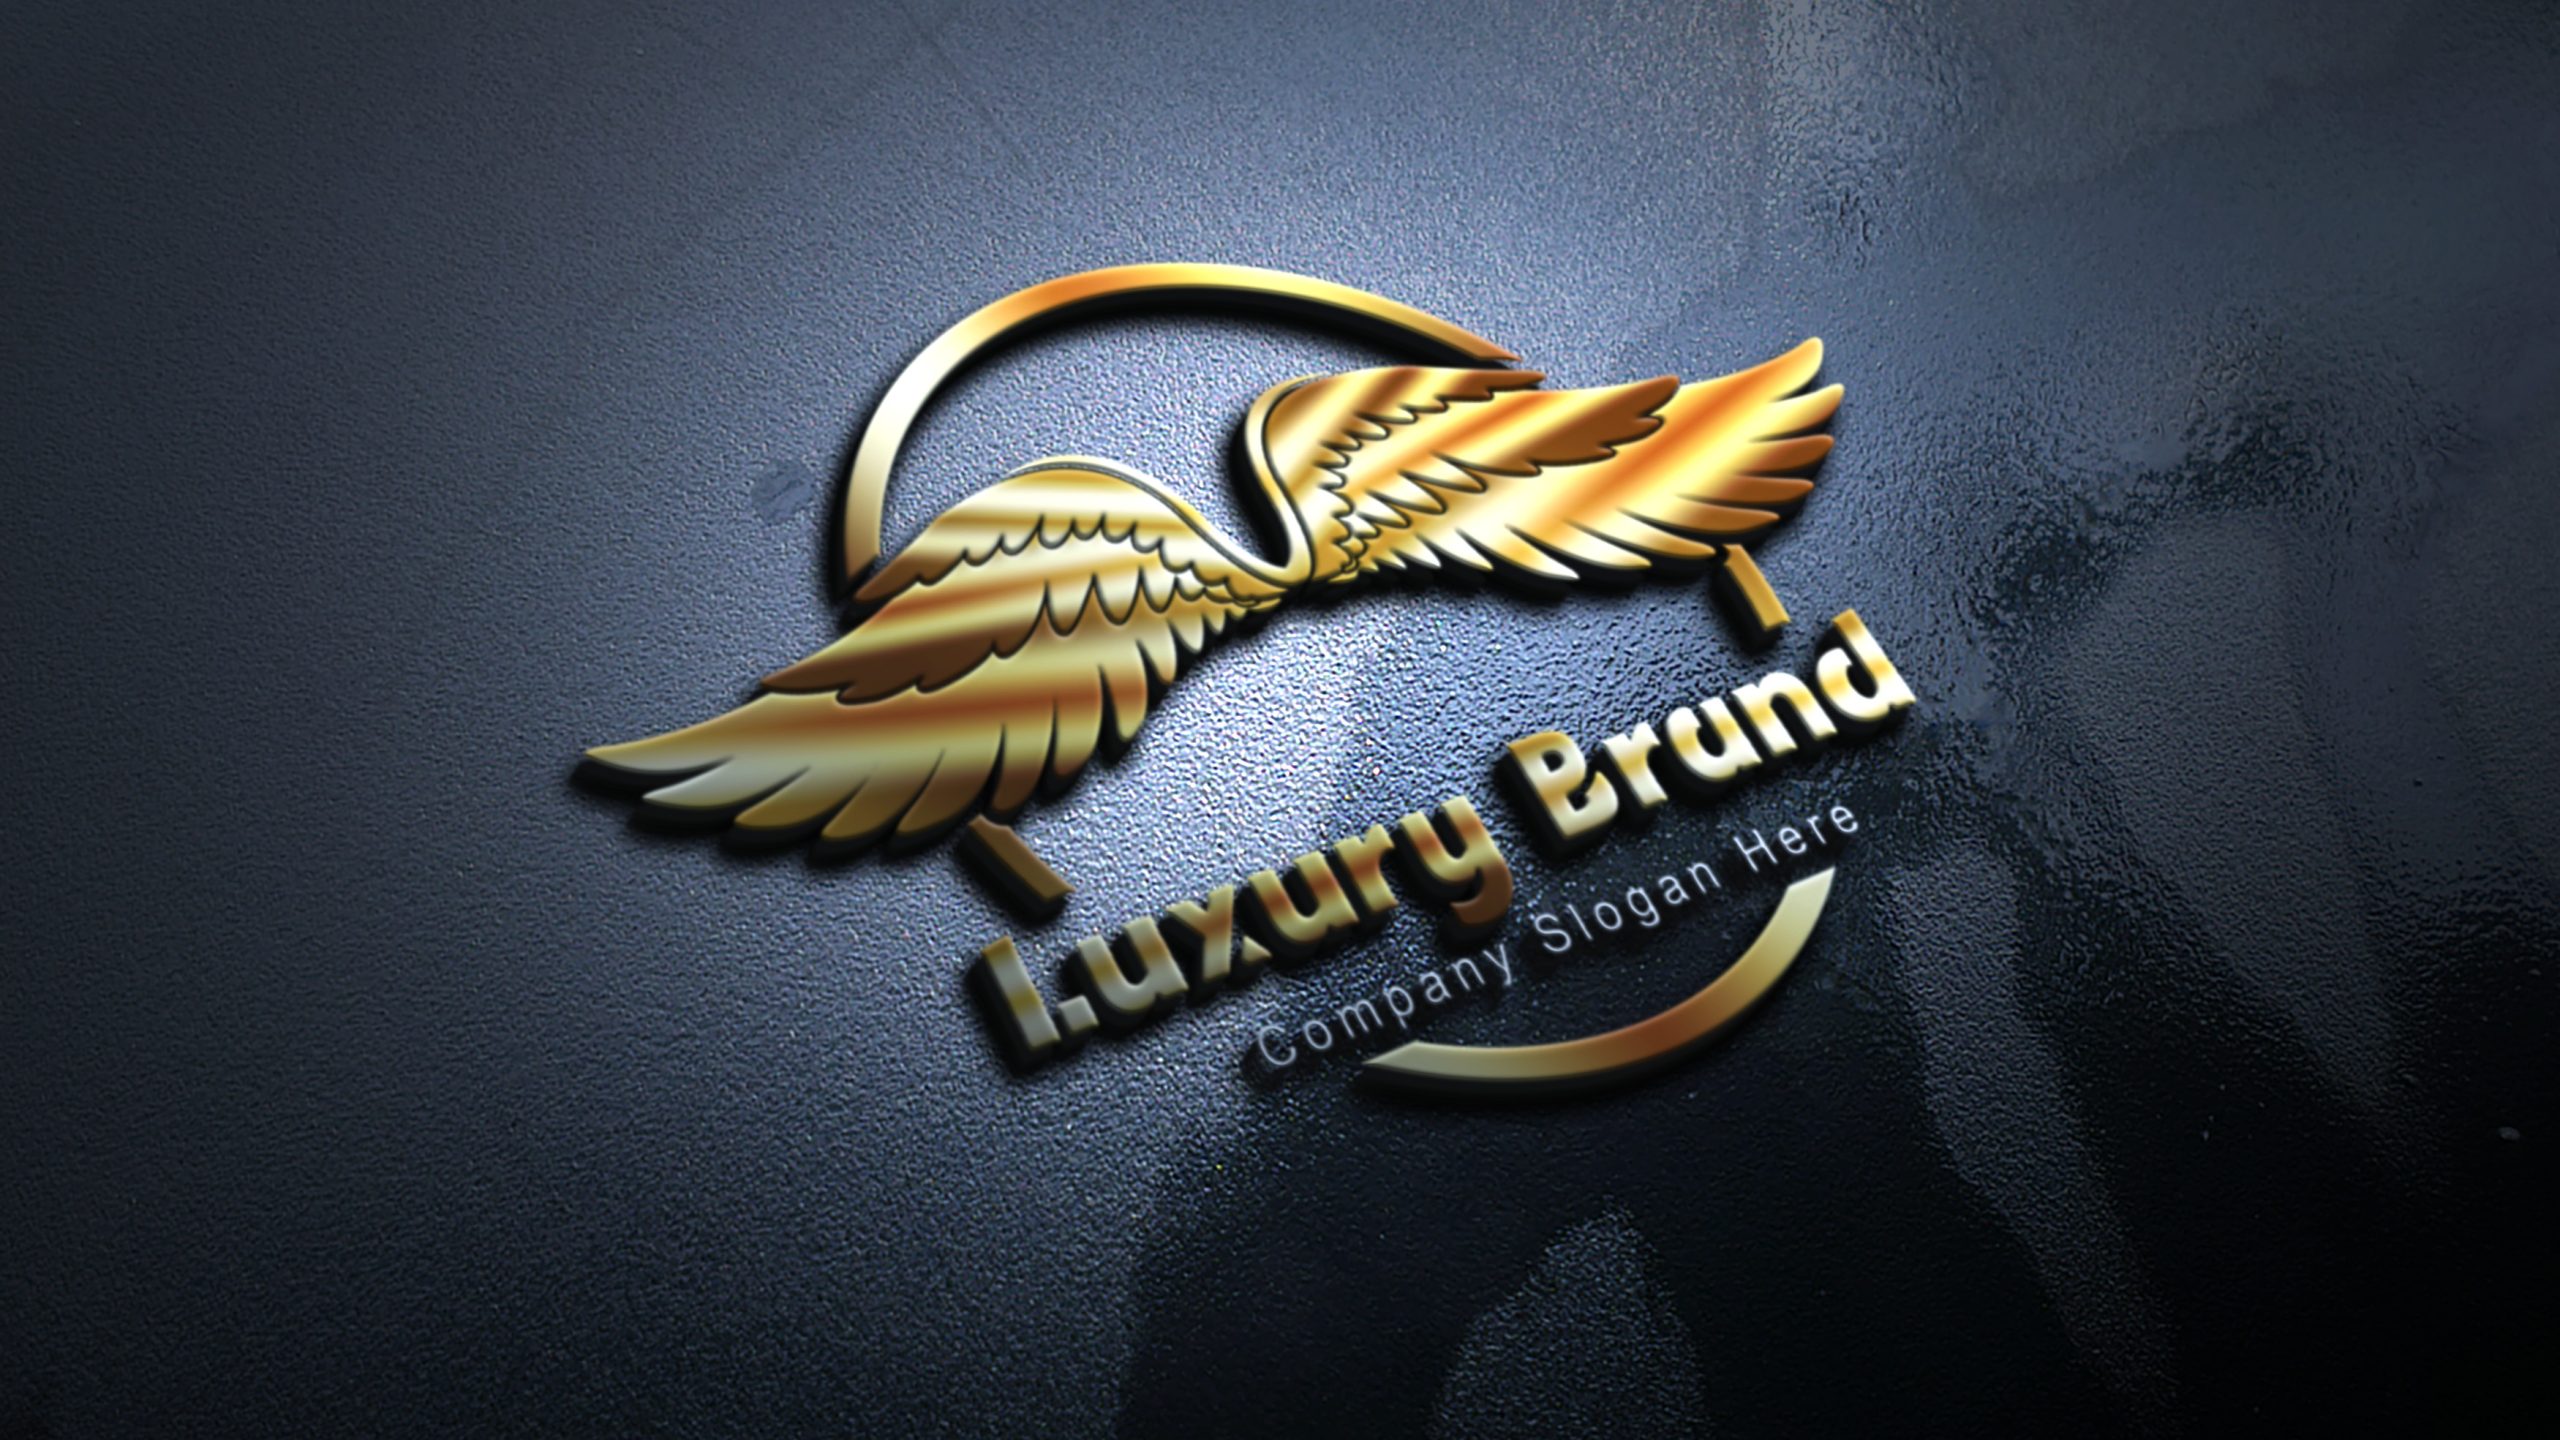 Luxury Golden Logo Design – GraphicsFamily